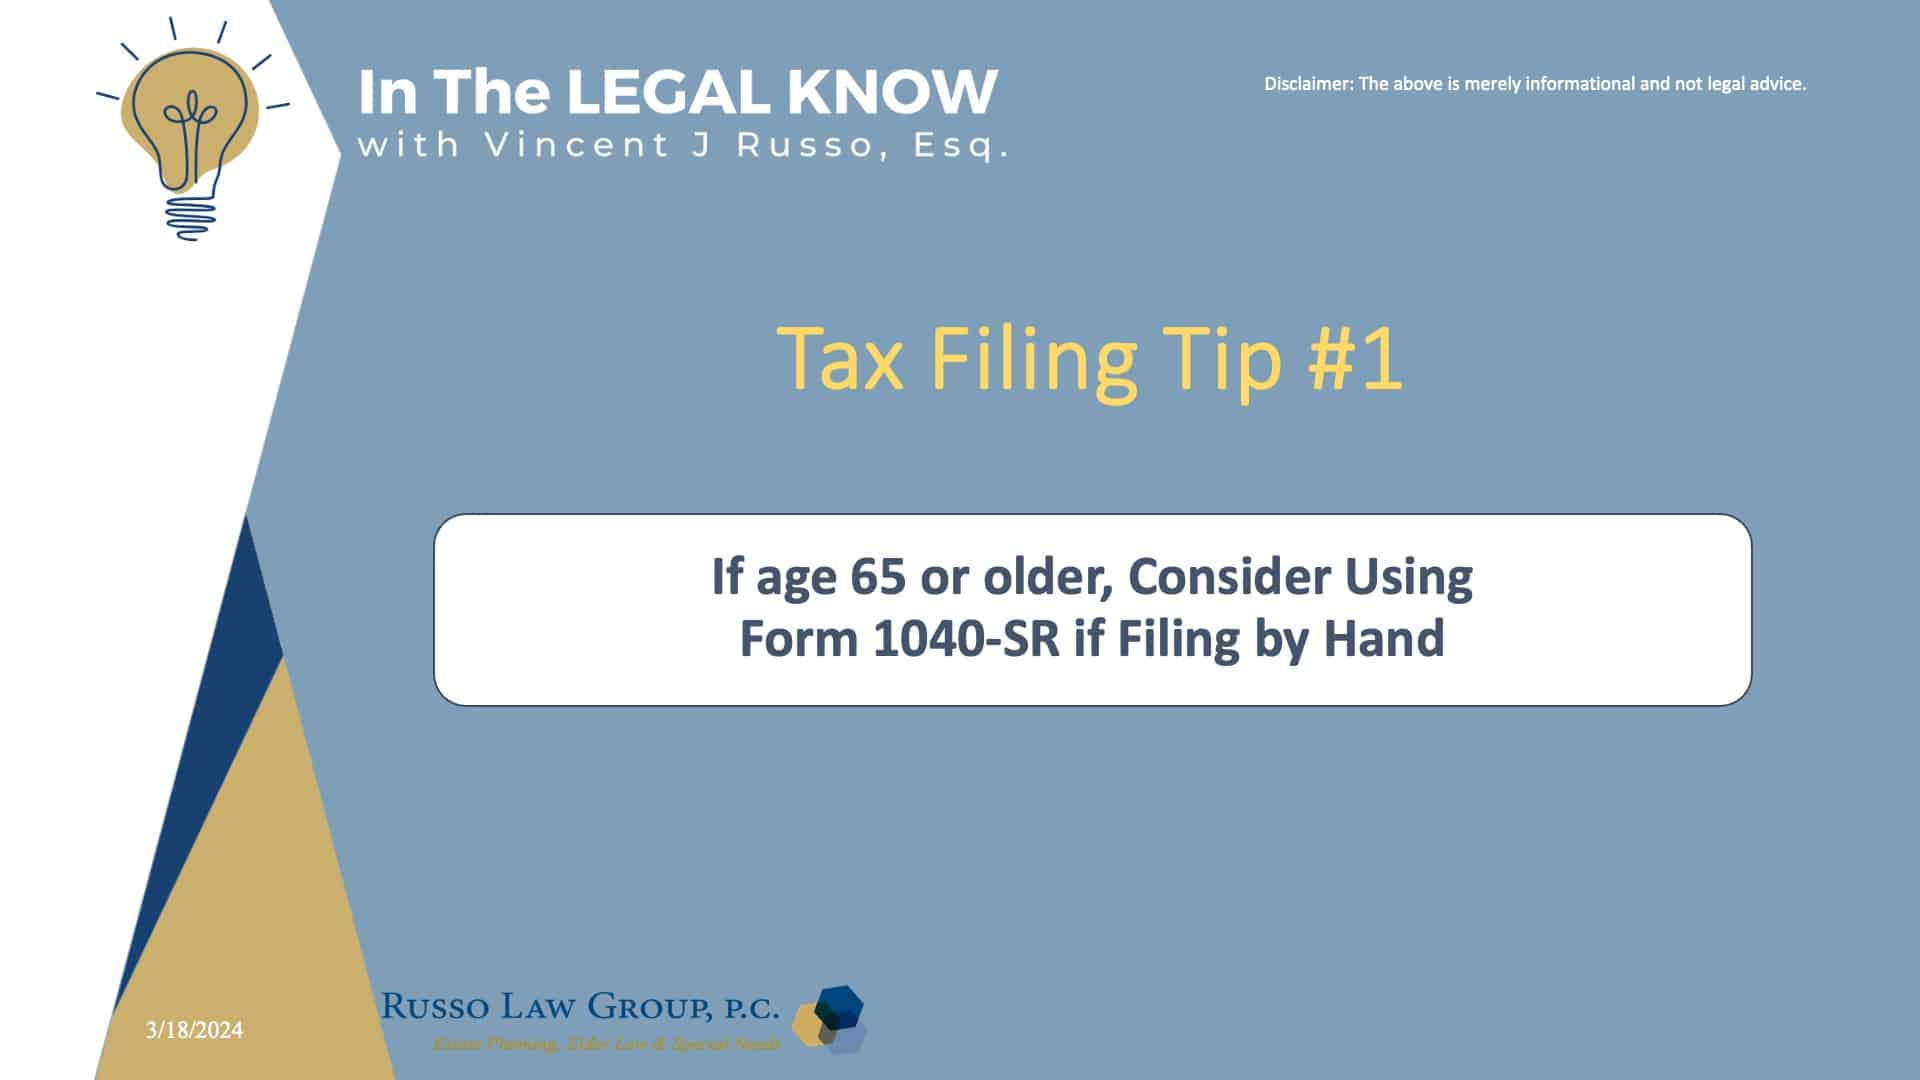 Tax Filing Tip #1